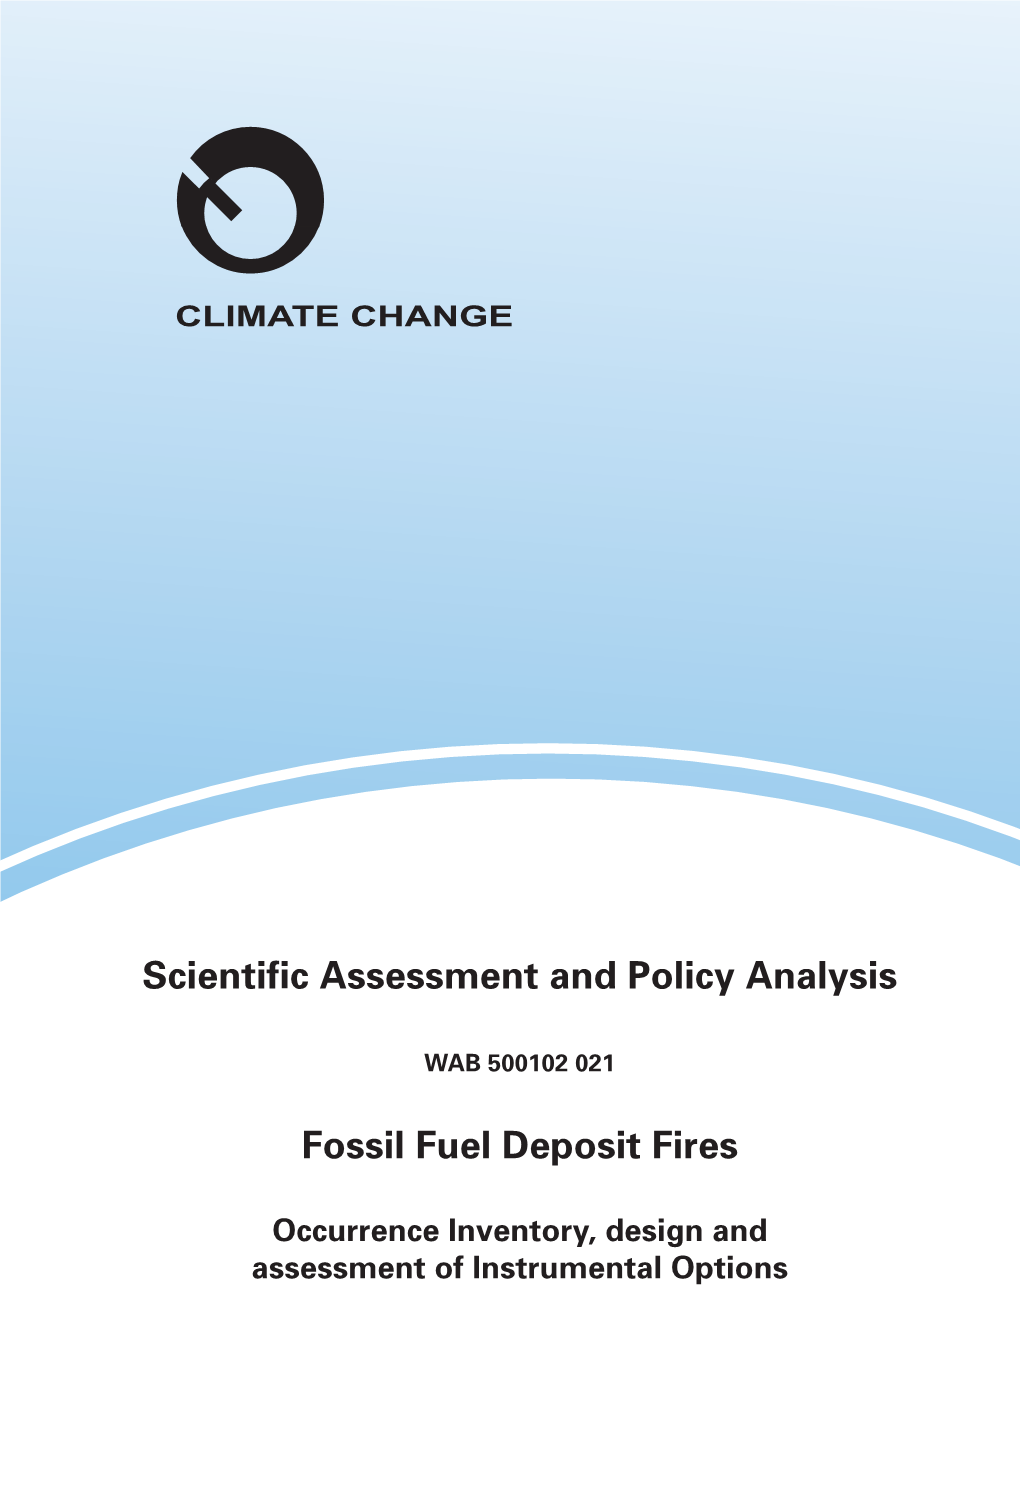 WAB Rapport 500102021 Fossil Fuel Deposit Fires